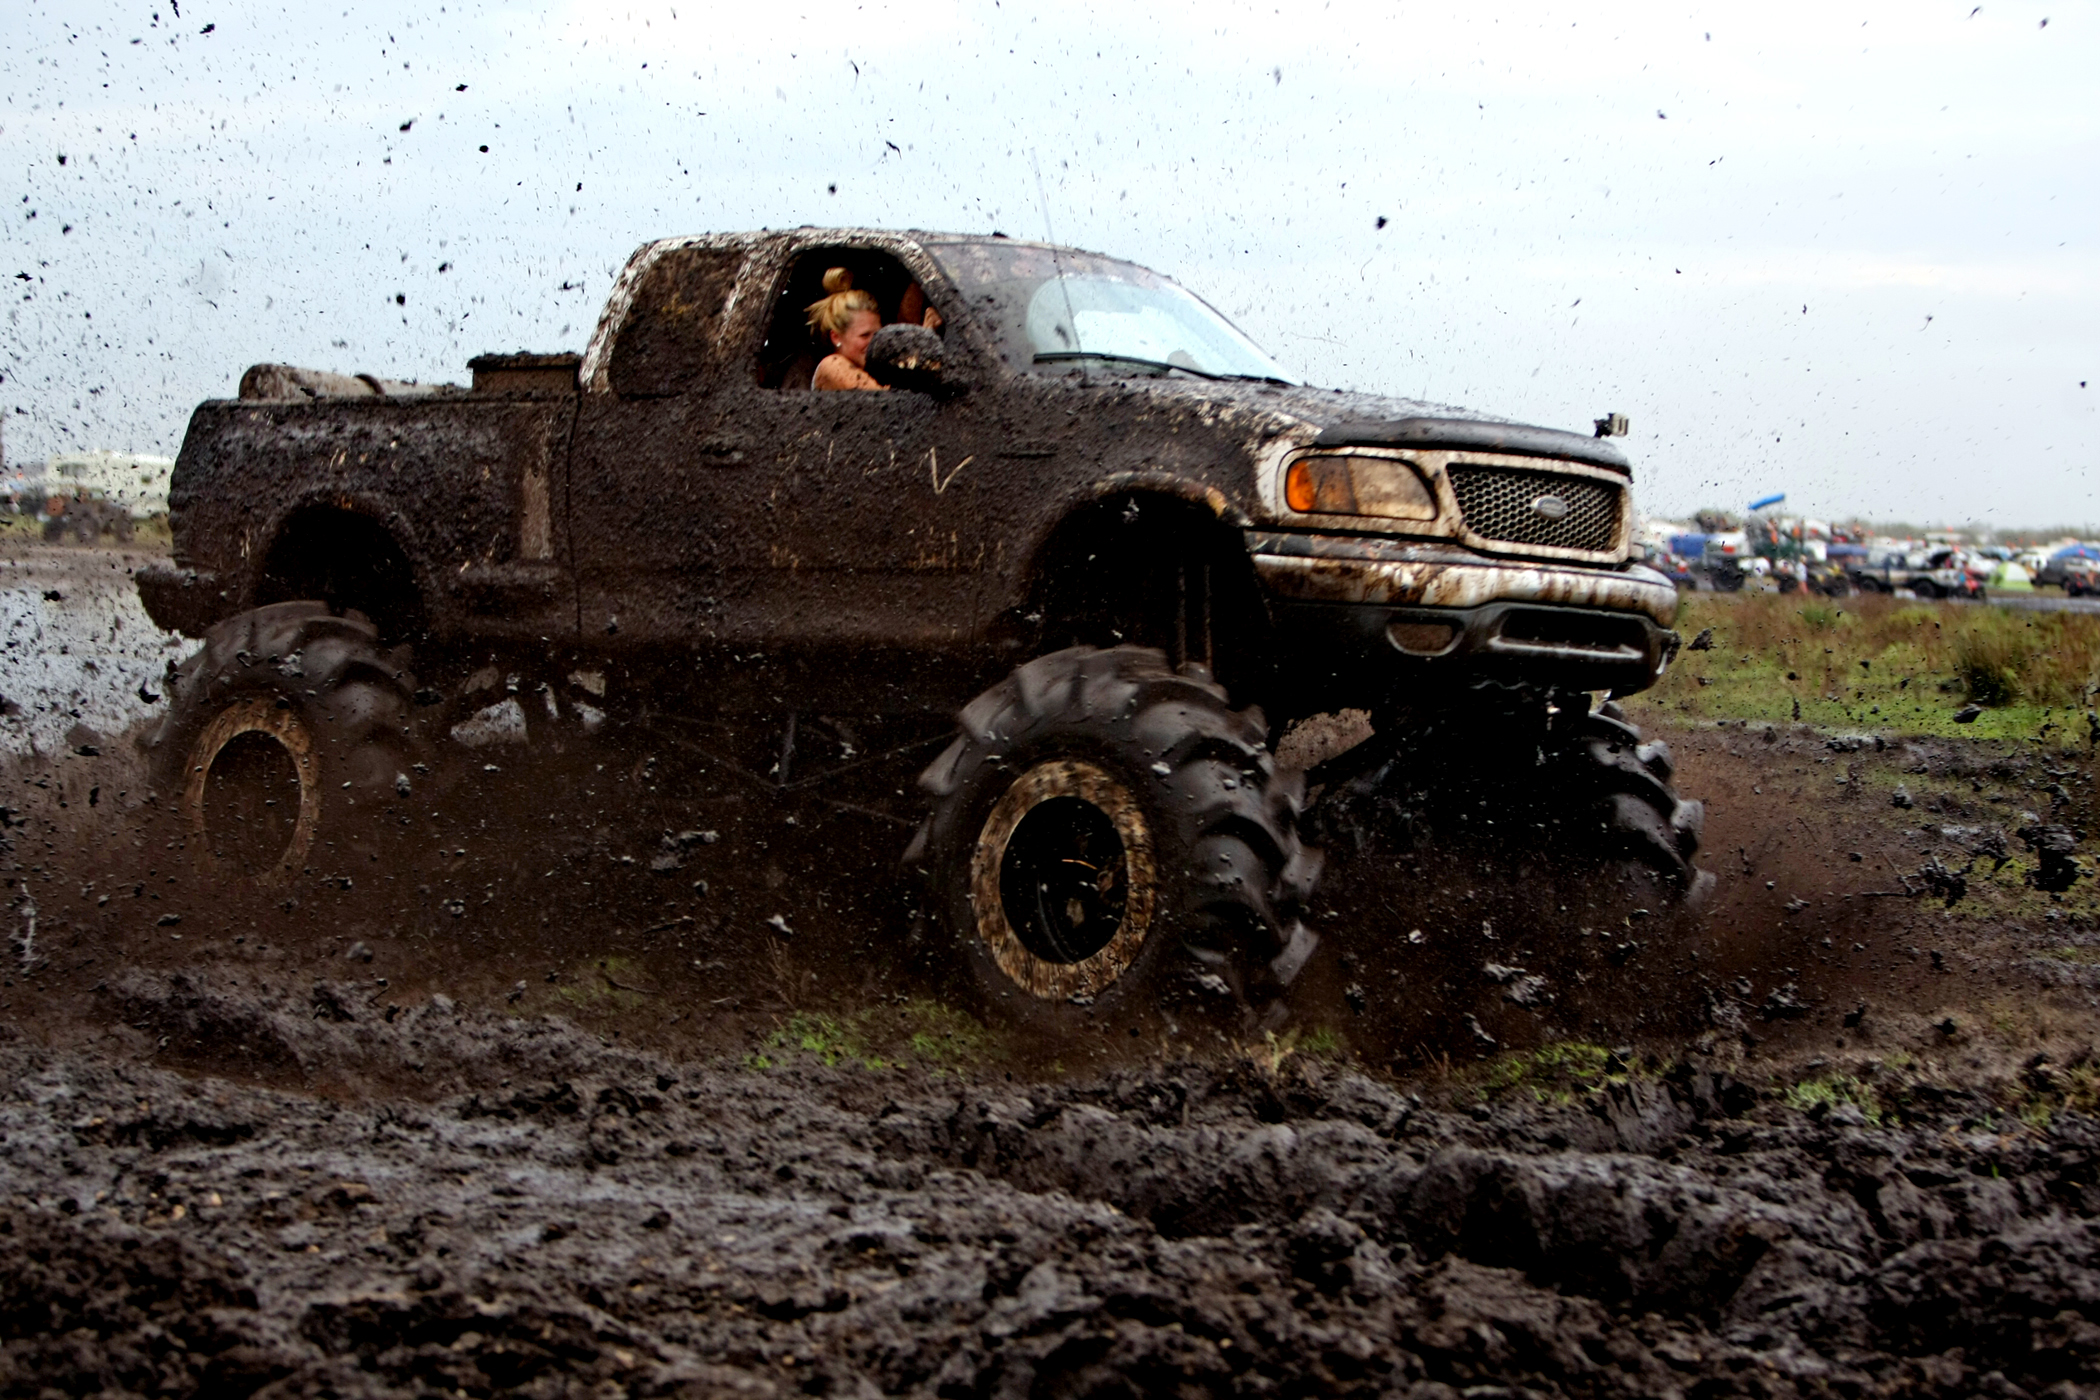 mud bogging, 4x4, Offroad, Race, Racing, Monster truck, Race, Racing, Pickup, Ford Wallpaper